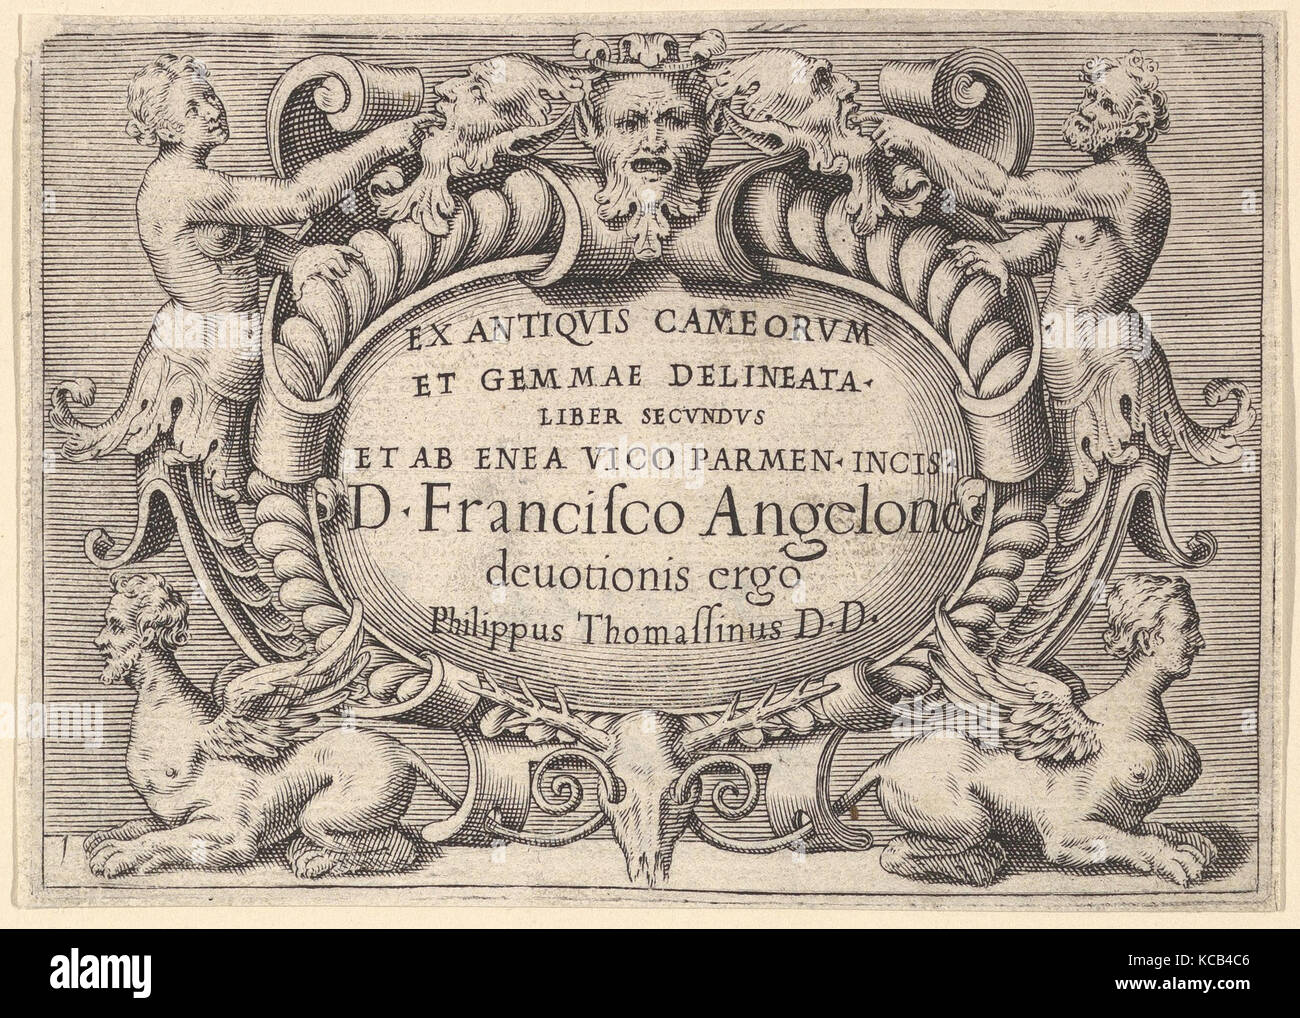 Ex Antiquis Cameorum et Gemmae Delineata/ Liber Secundus/et ab Enea Vico Parmen Incis., Anonymous, Italian, 16th century Stock Photo